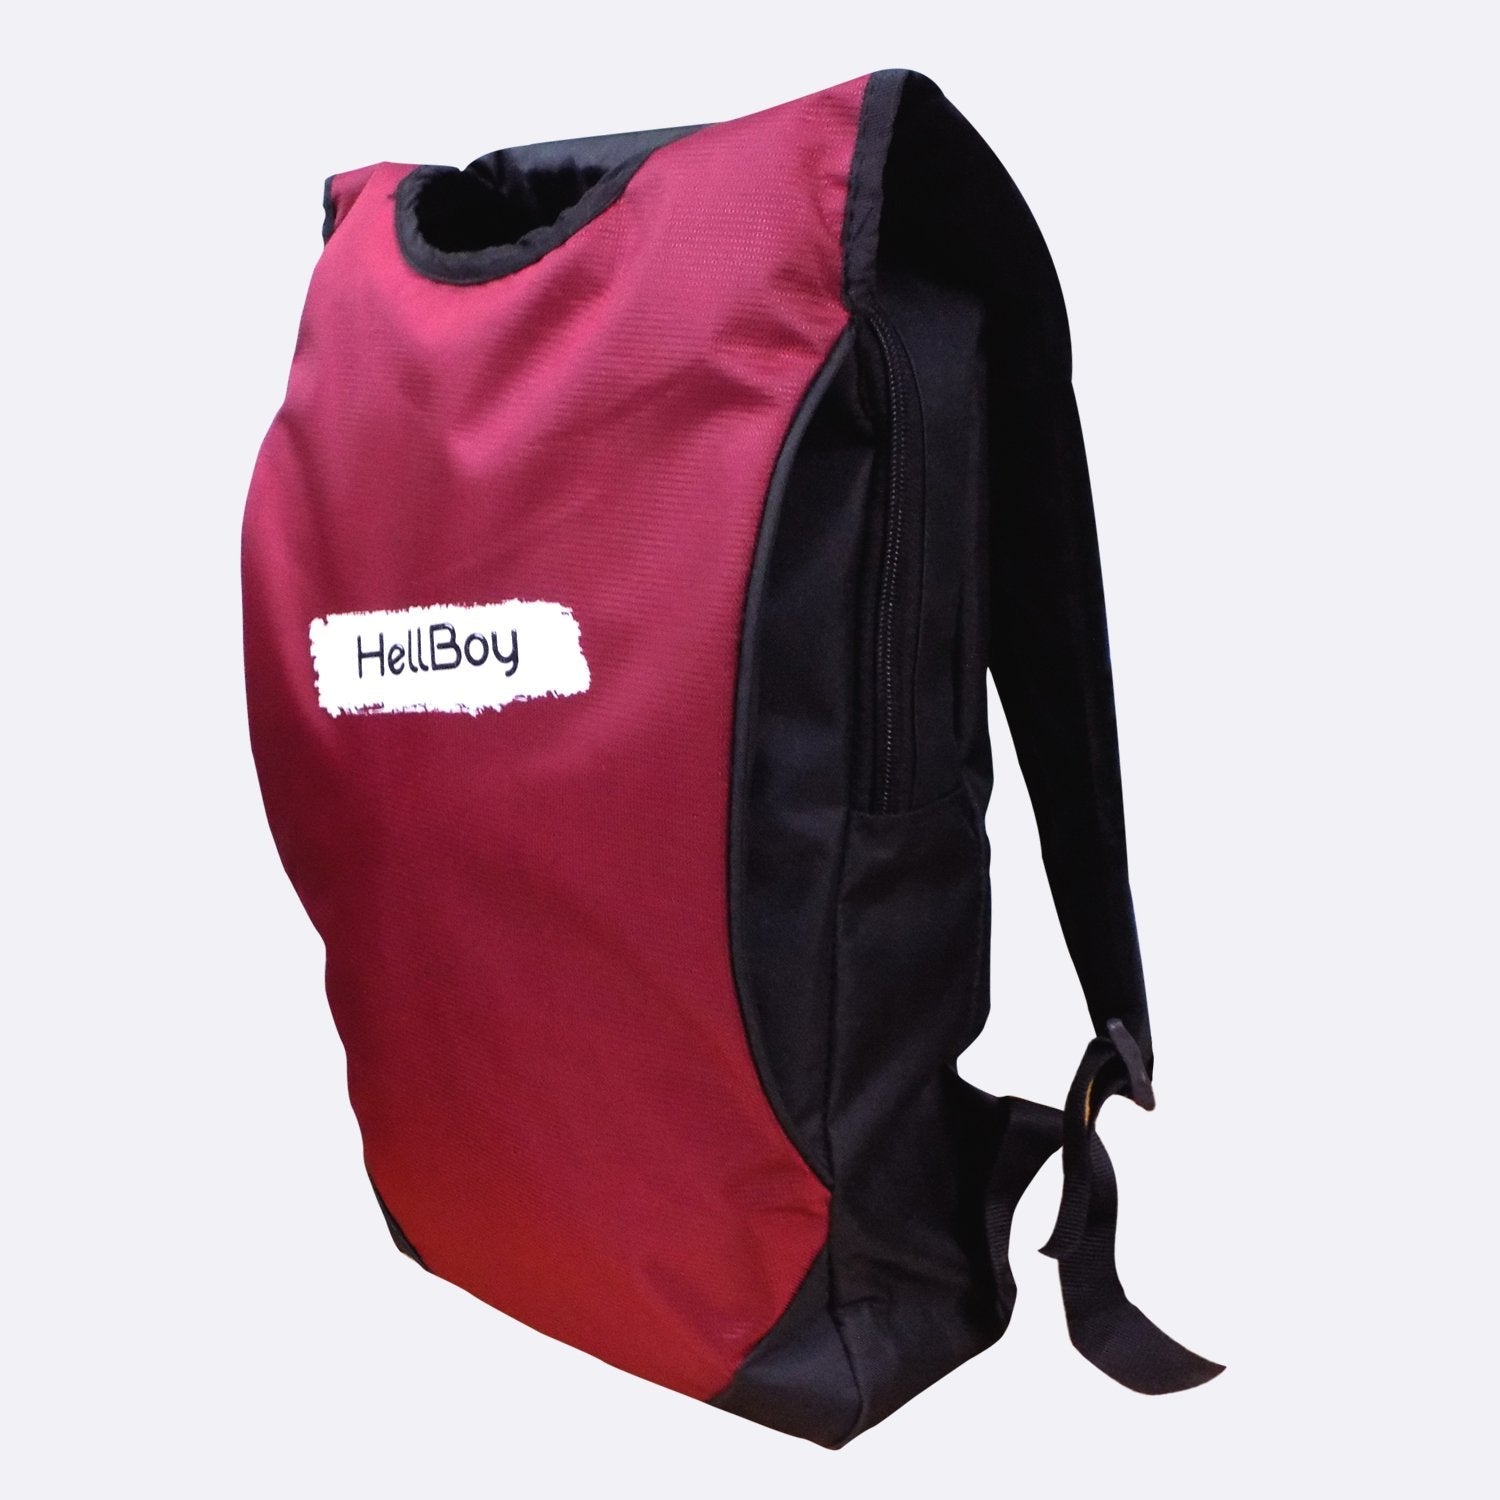 1373 Tuition Bag (Multicolour) DeoDap